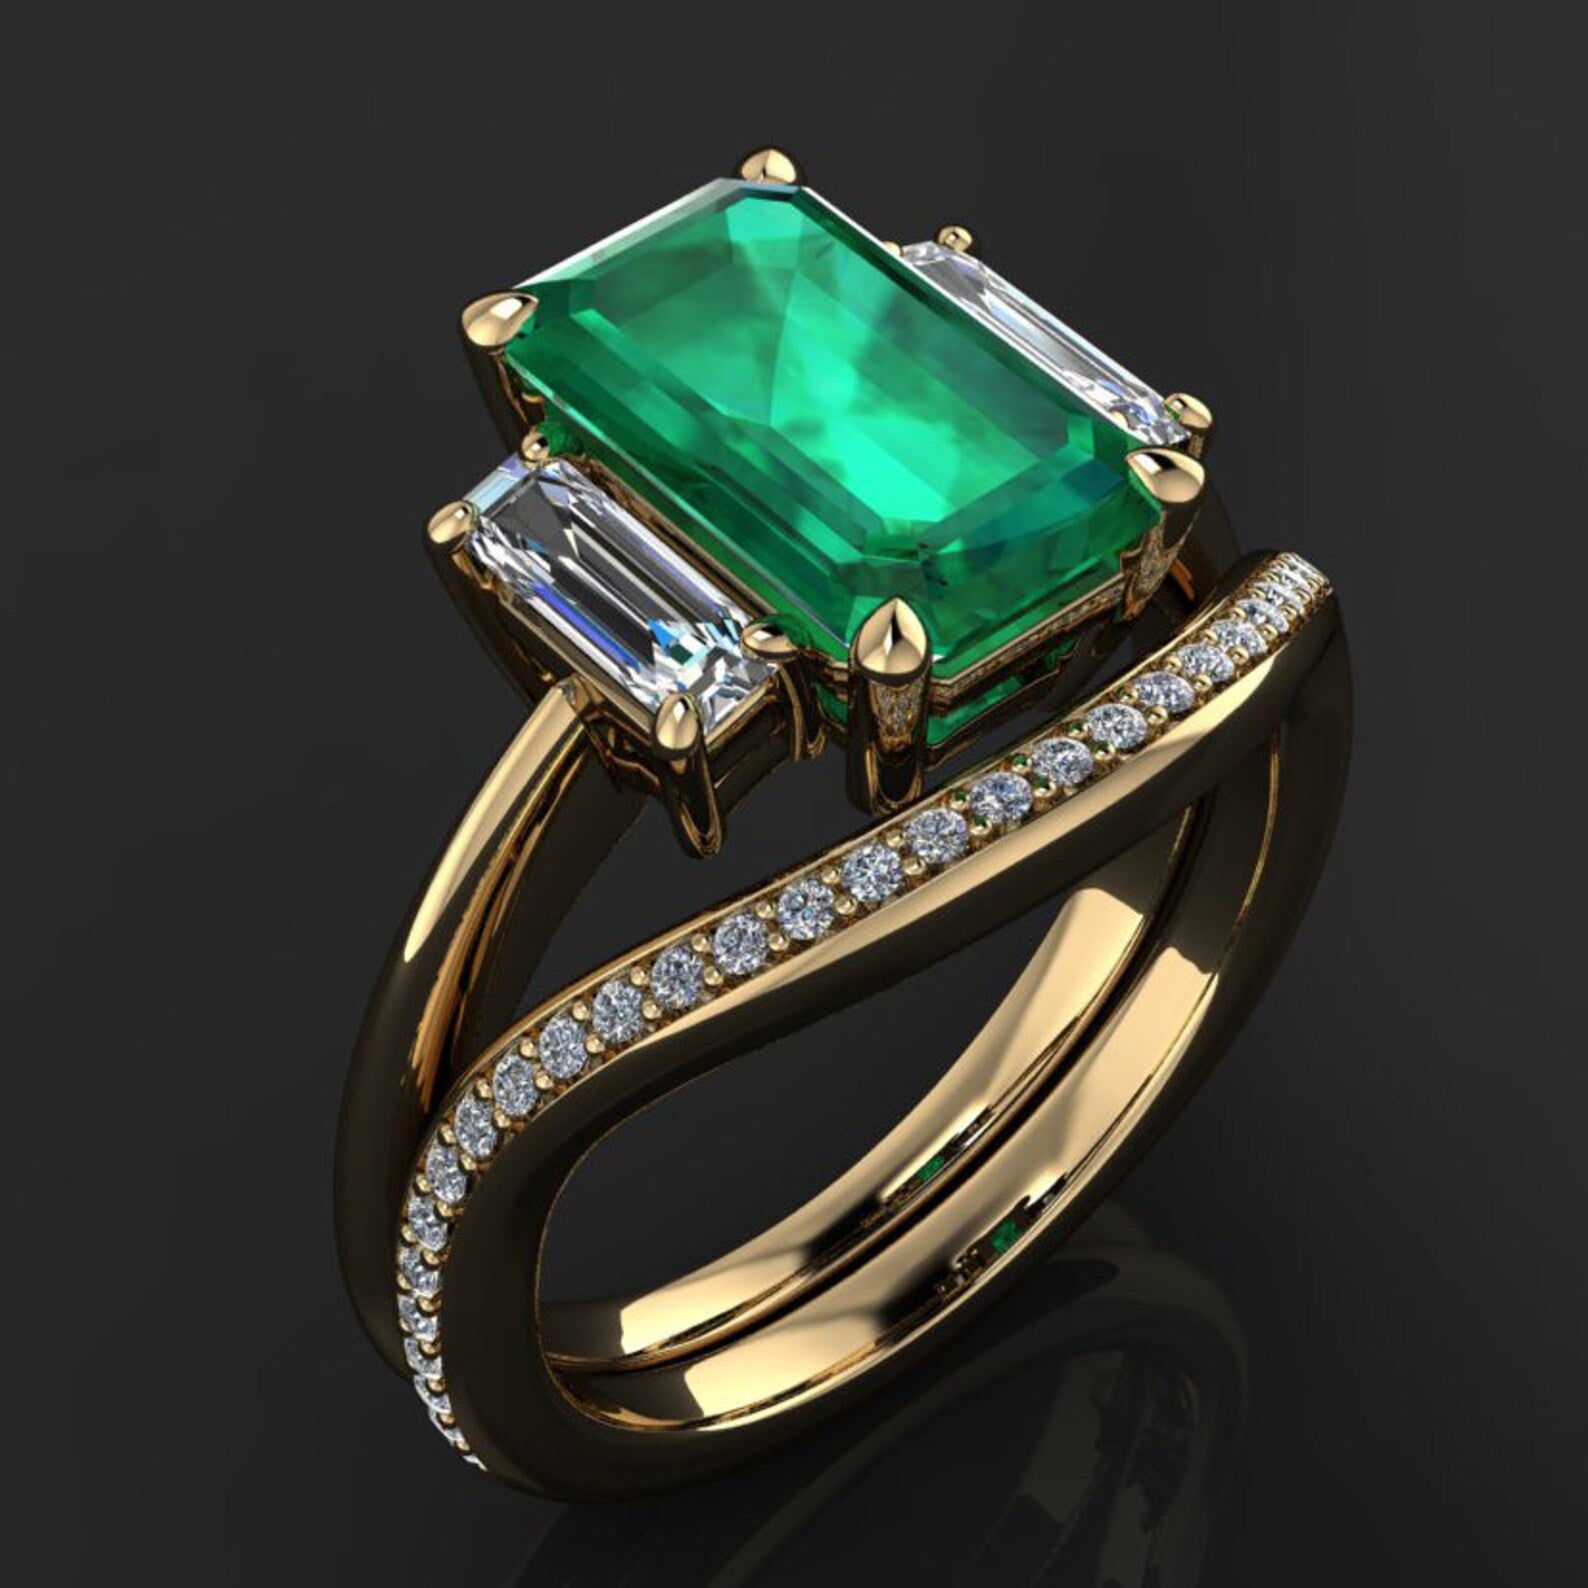 kennedy ring - 2.3 carat emerald cut ZAYA moissanite engagement ring, green moissanite ring - J Hollywood Designs